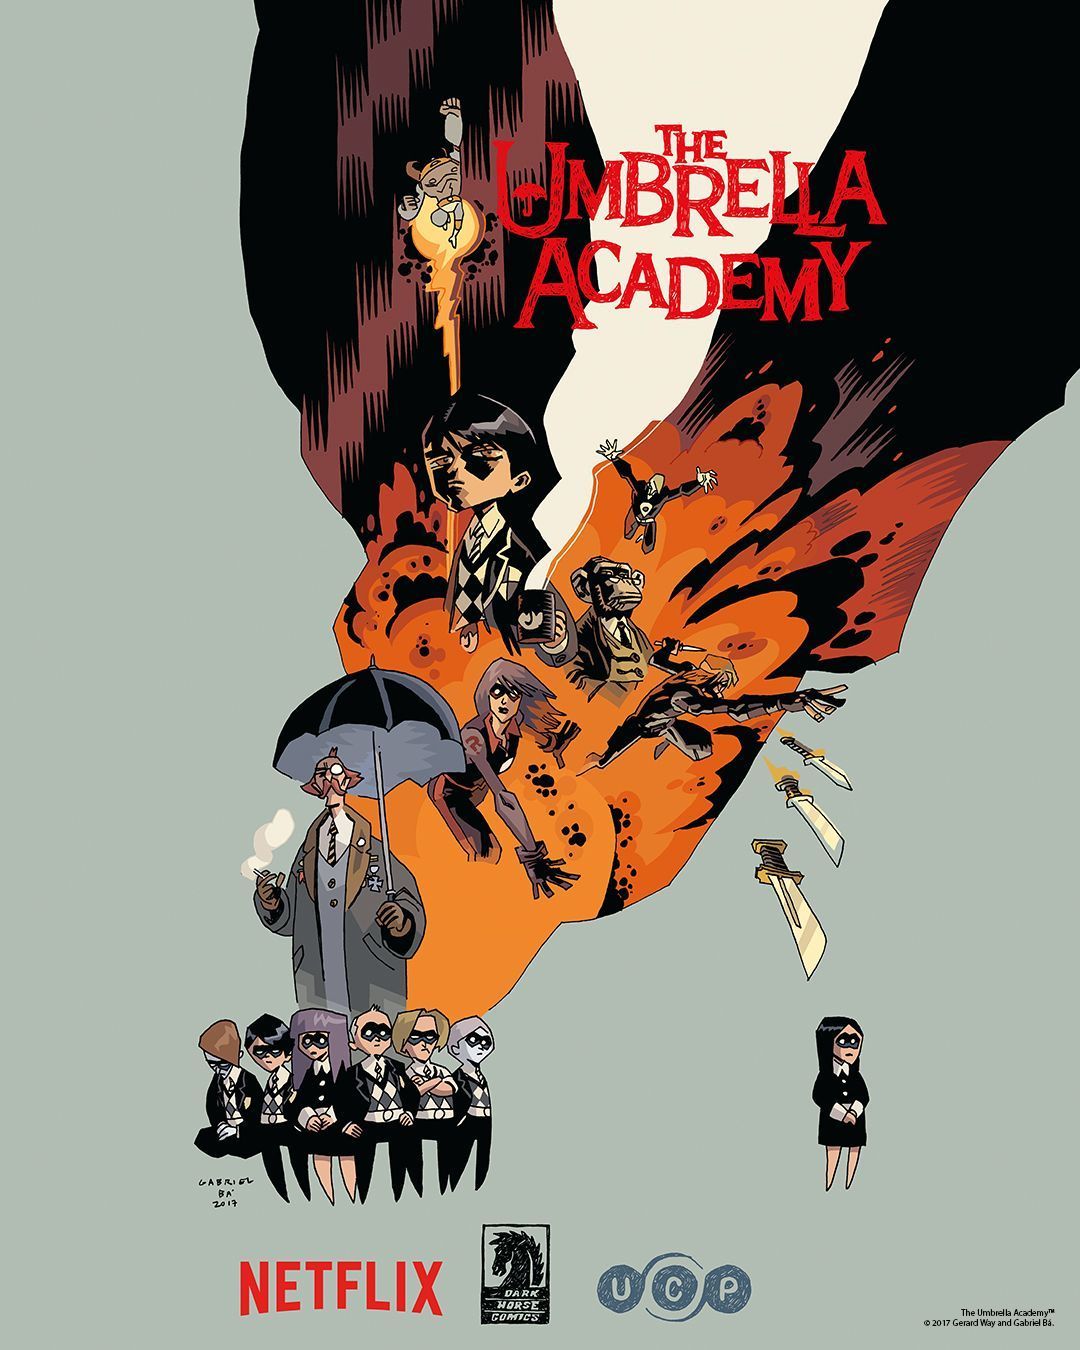 The Umbrella Academy Wallpaper .wallpaperaccess.com